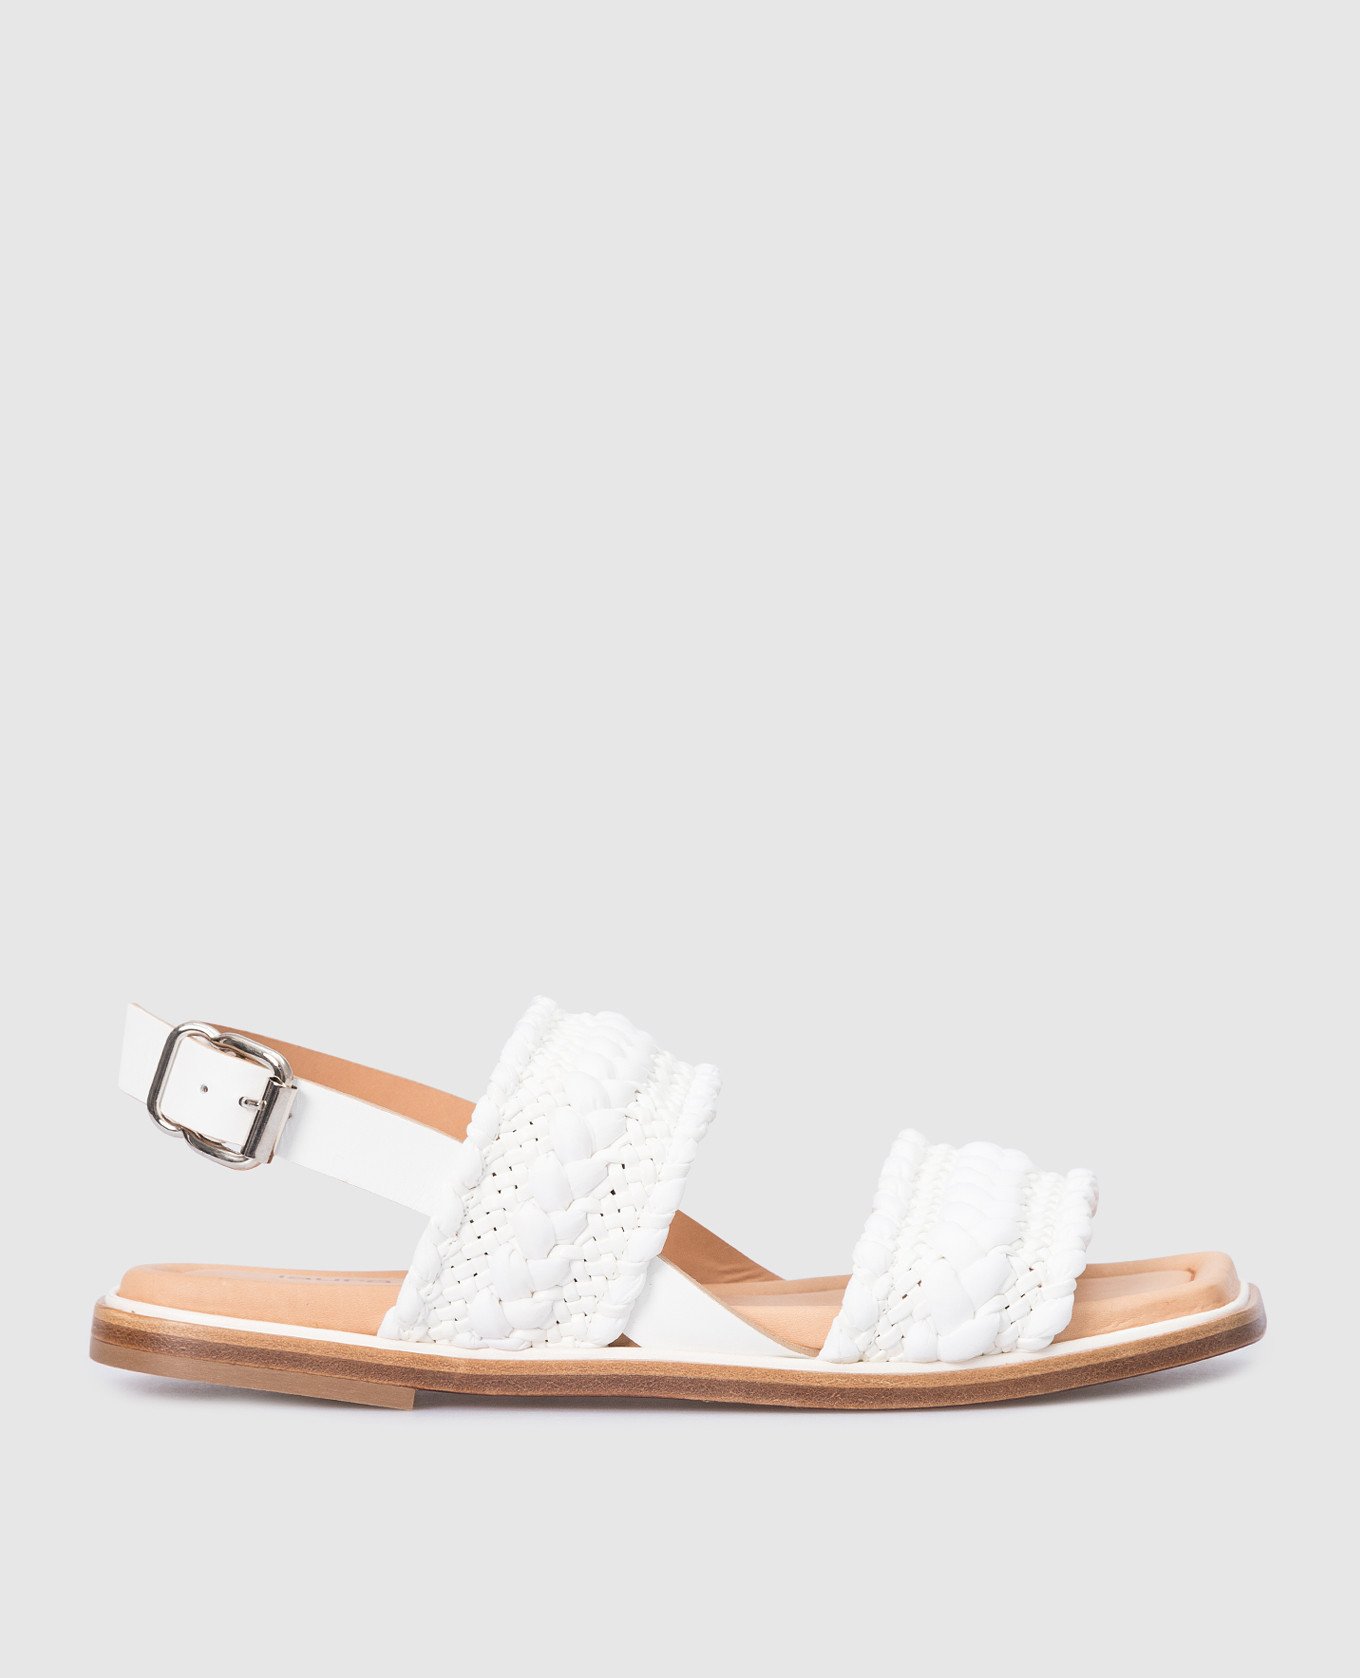 White woven sandals